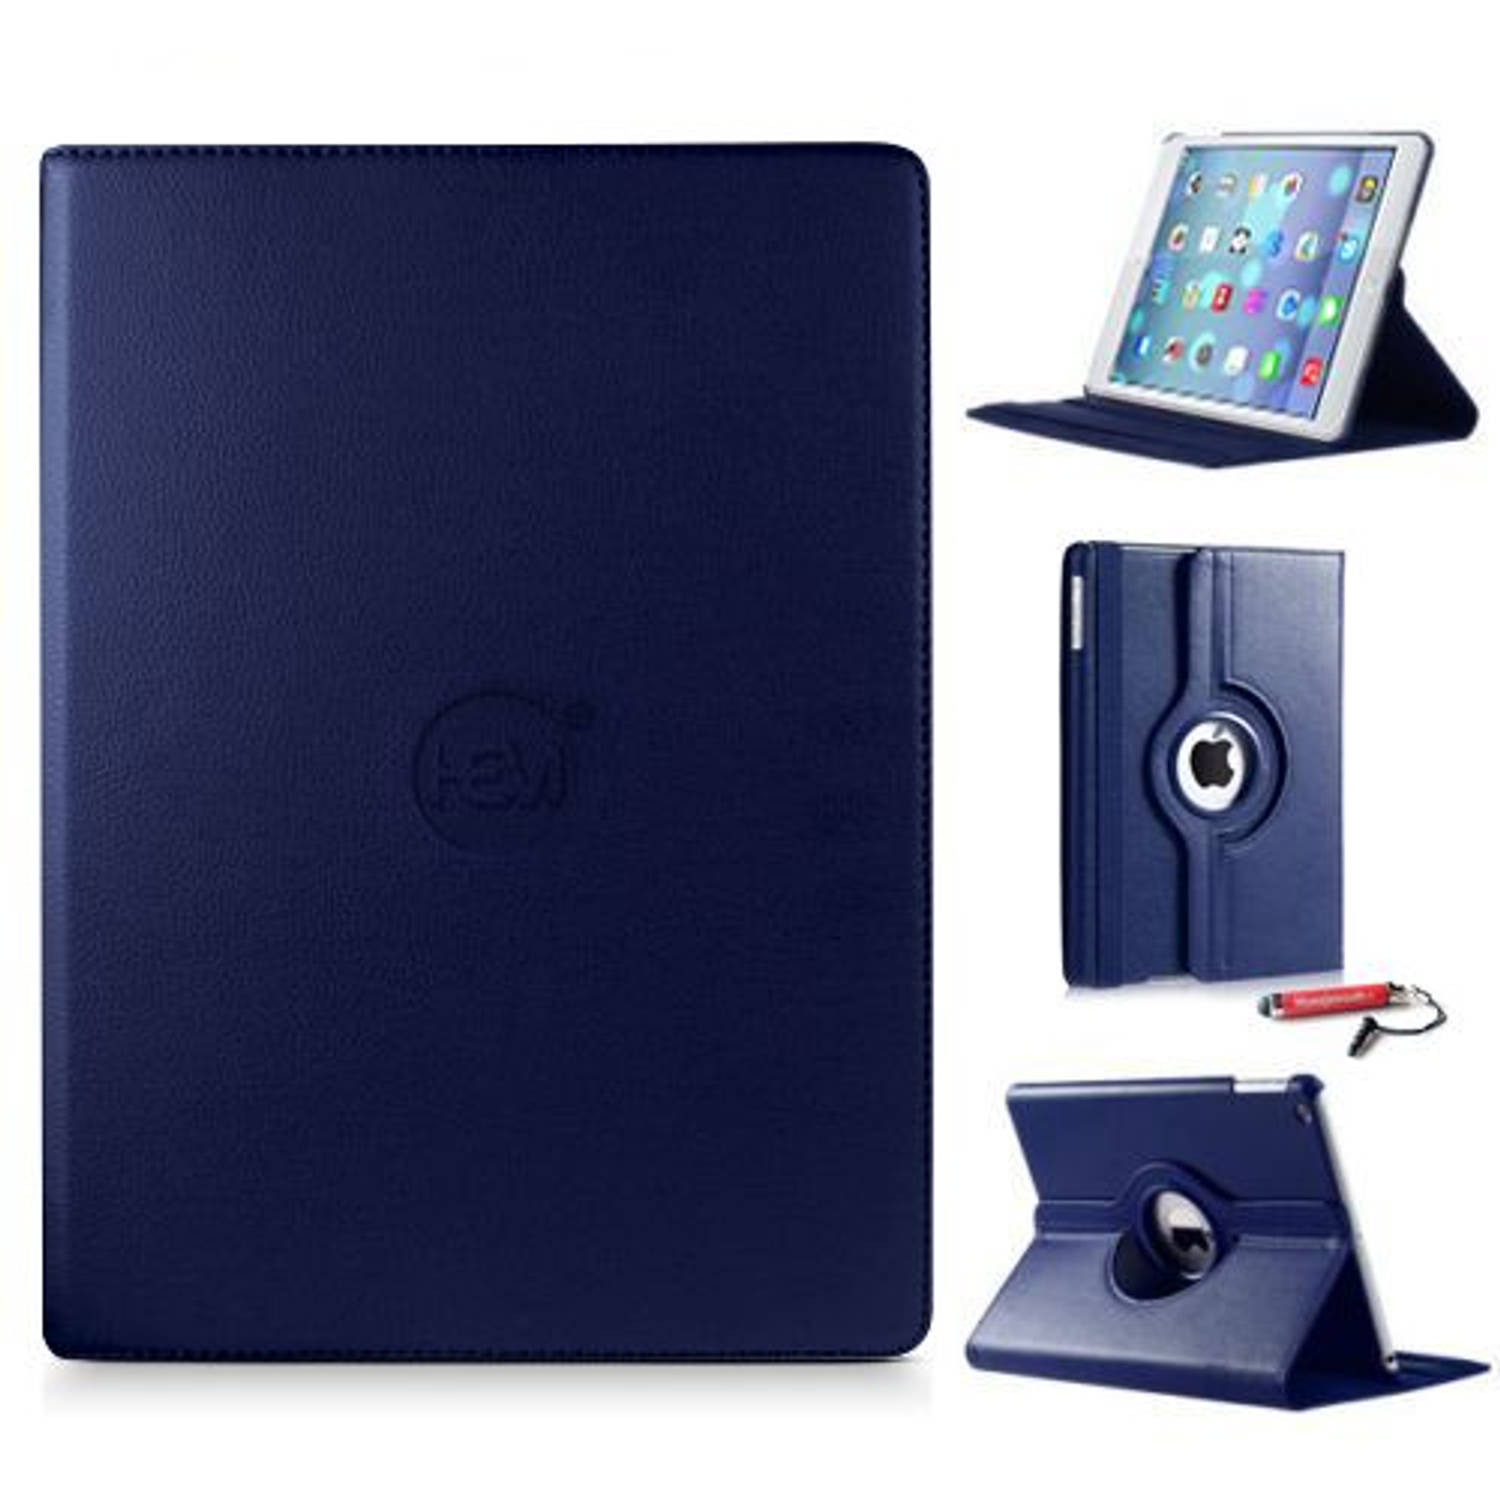 iPad Pro 12,9 inch 2018 - HEM Cover Donker Blauw met uitschuifbare Hoesjesweb stylus - Ipad hoes, Tablethoes